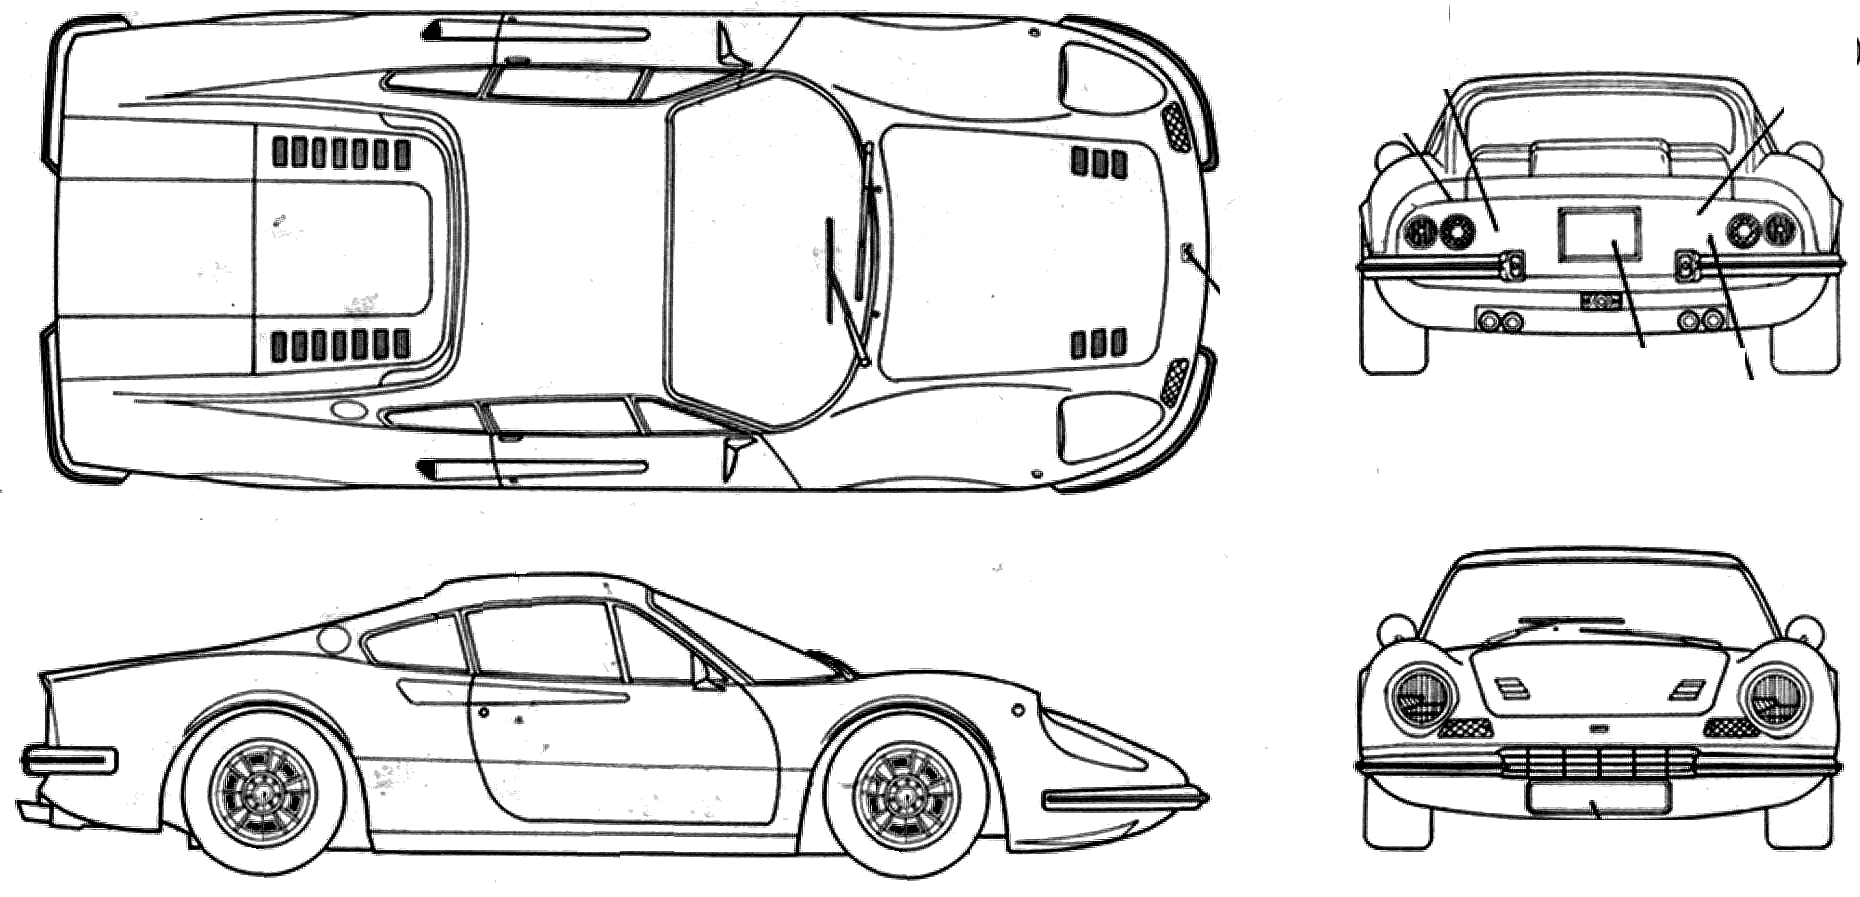 CAR blueprints - 1969 Ferrari Dino 246 GT Coupe blueprint